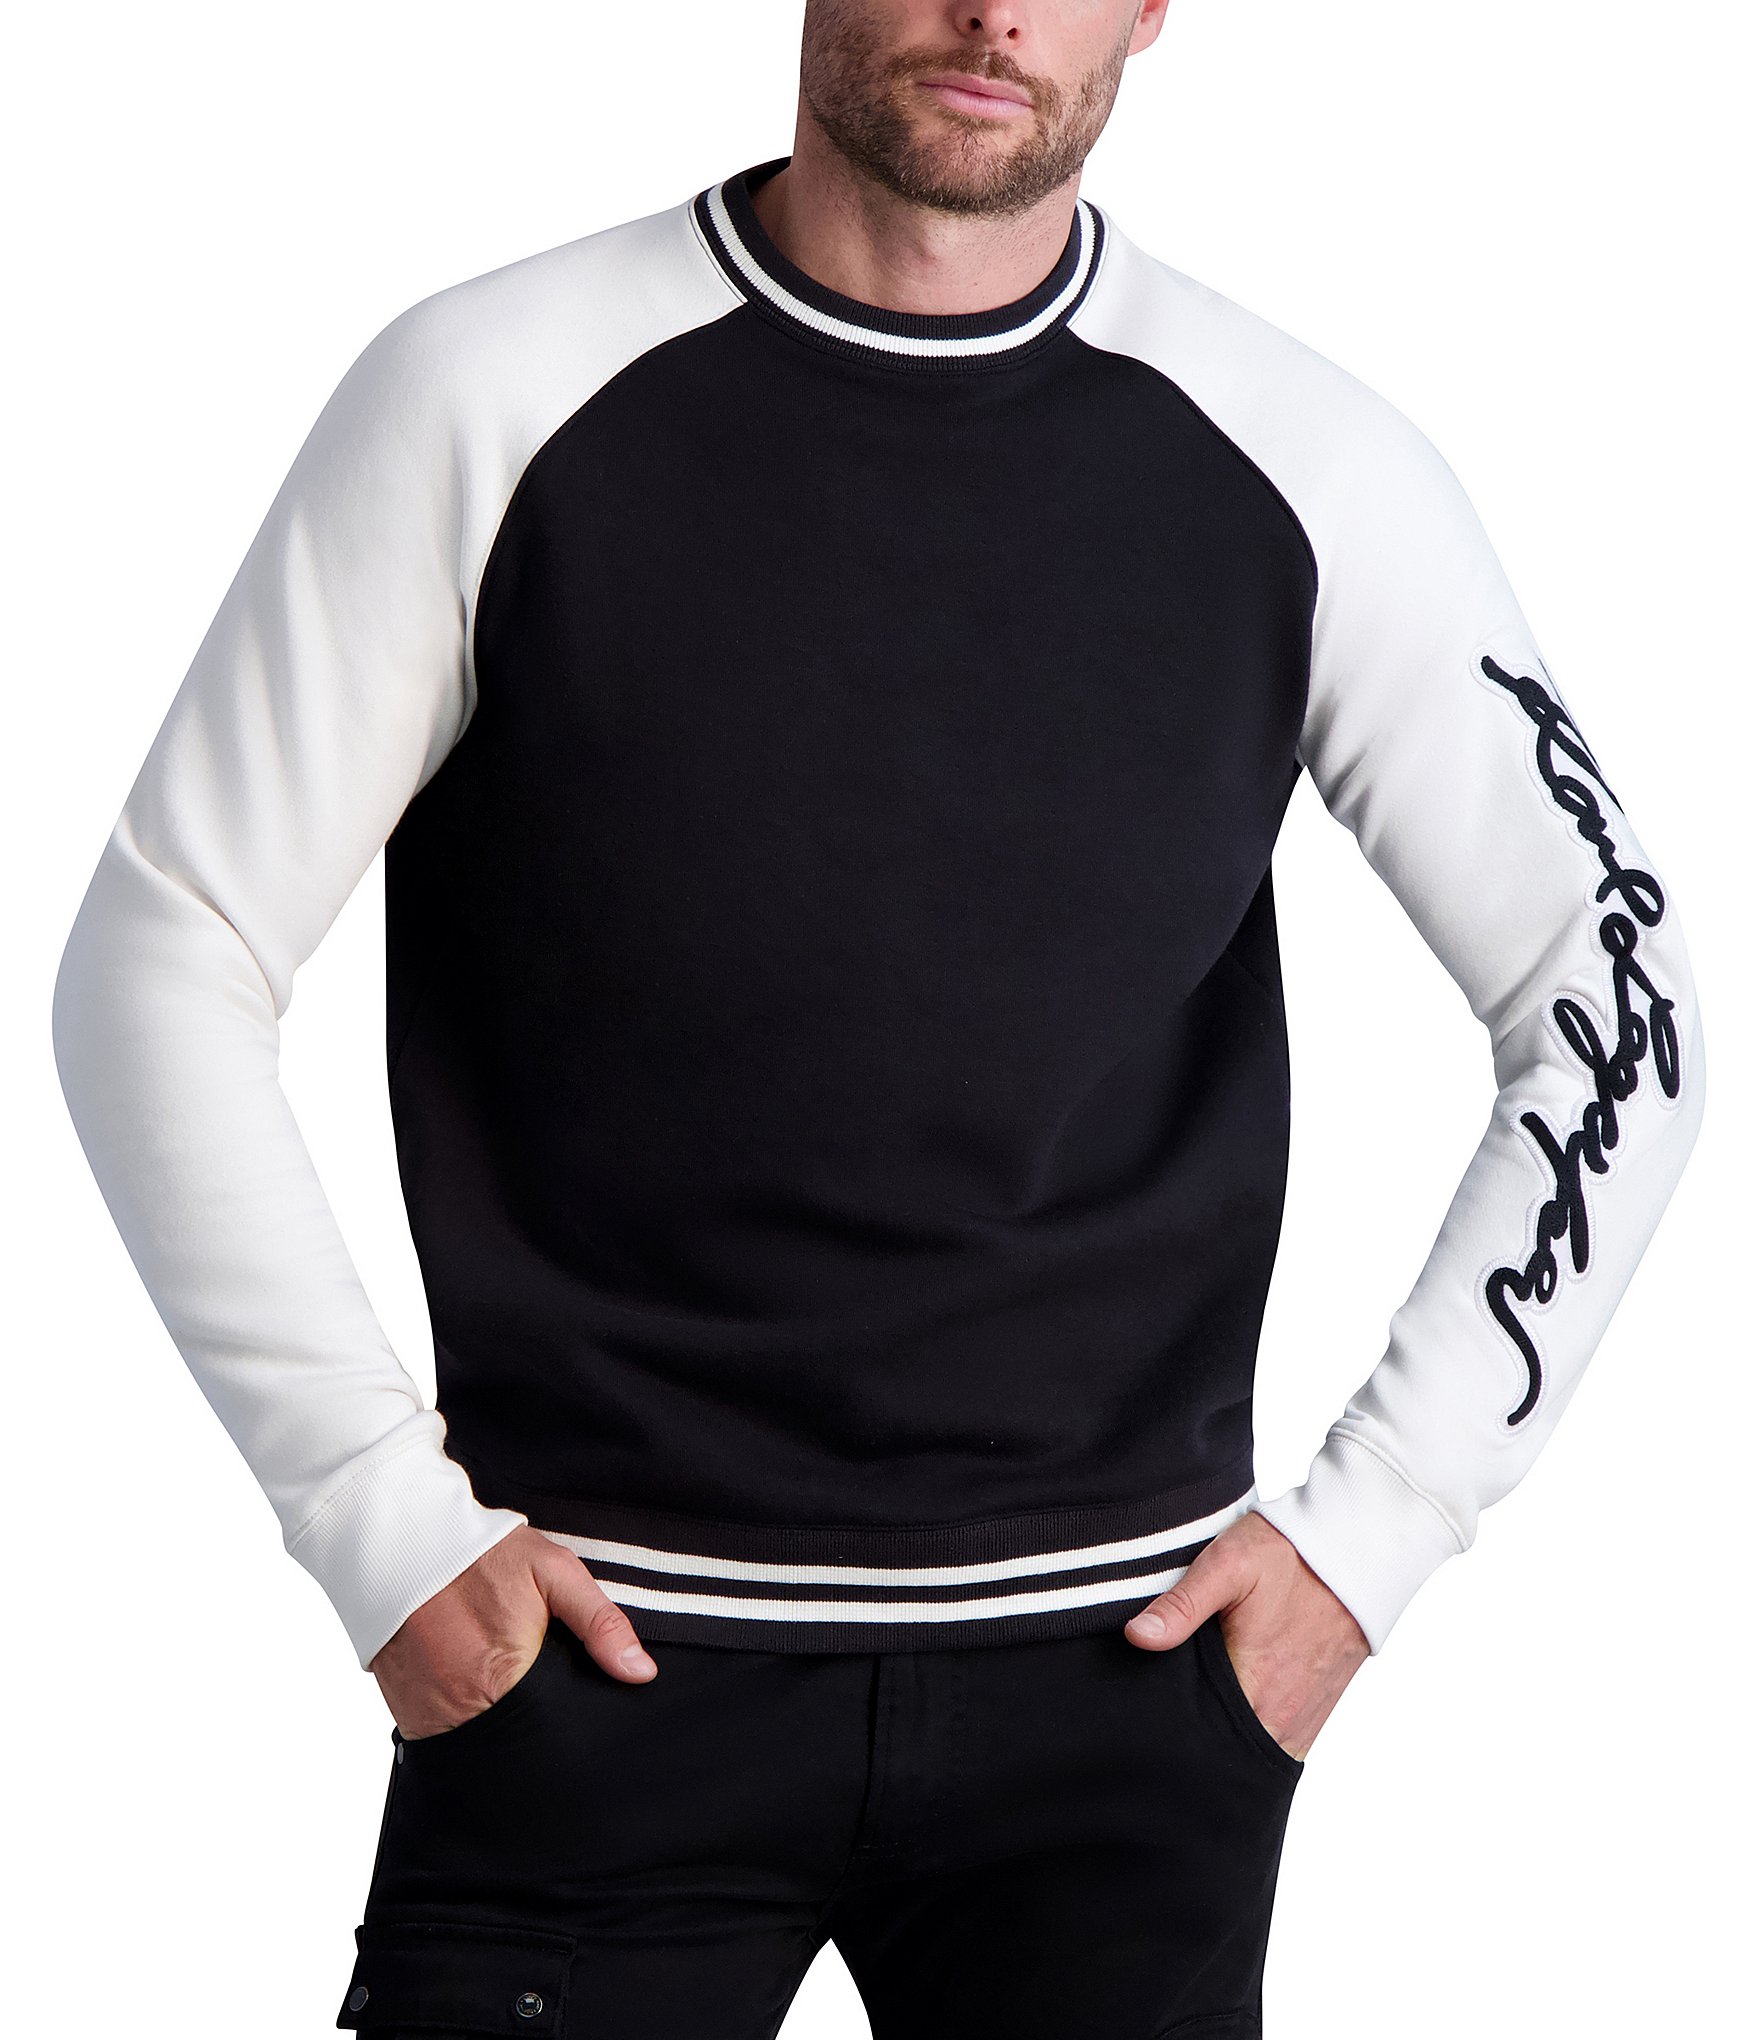 KARL LAGERFELD Paris Men's Stripe-Block T-shirt NEW NTW $129